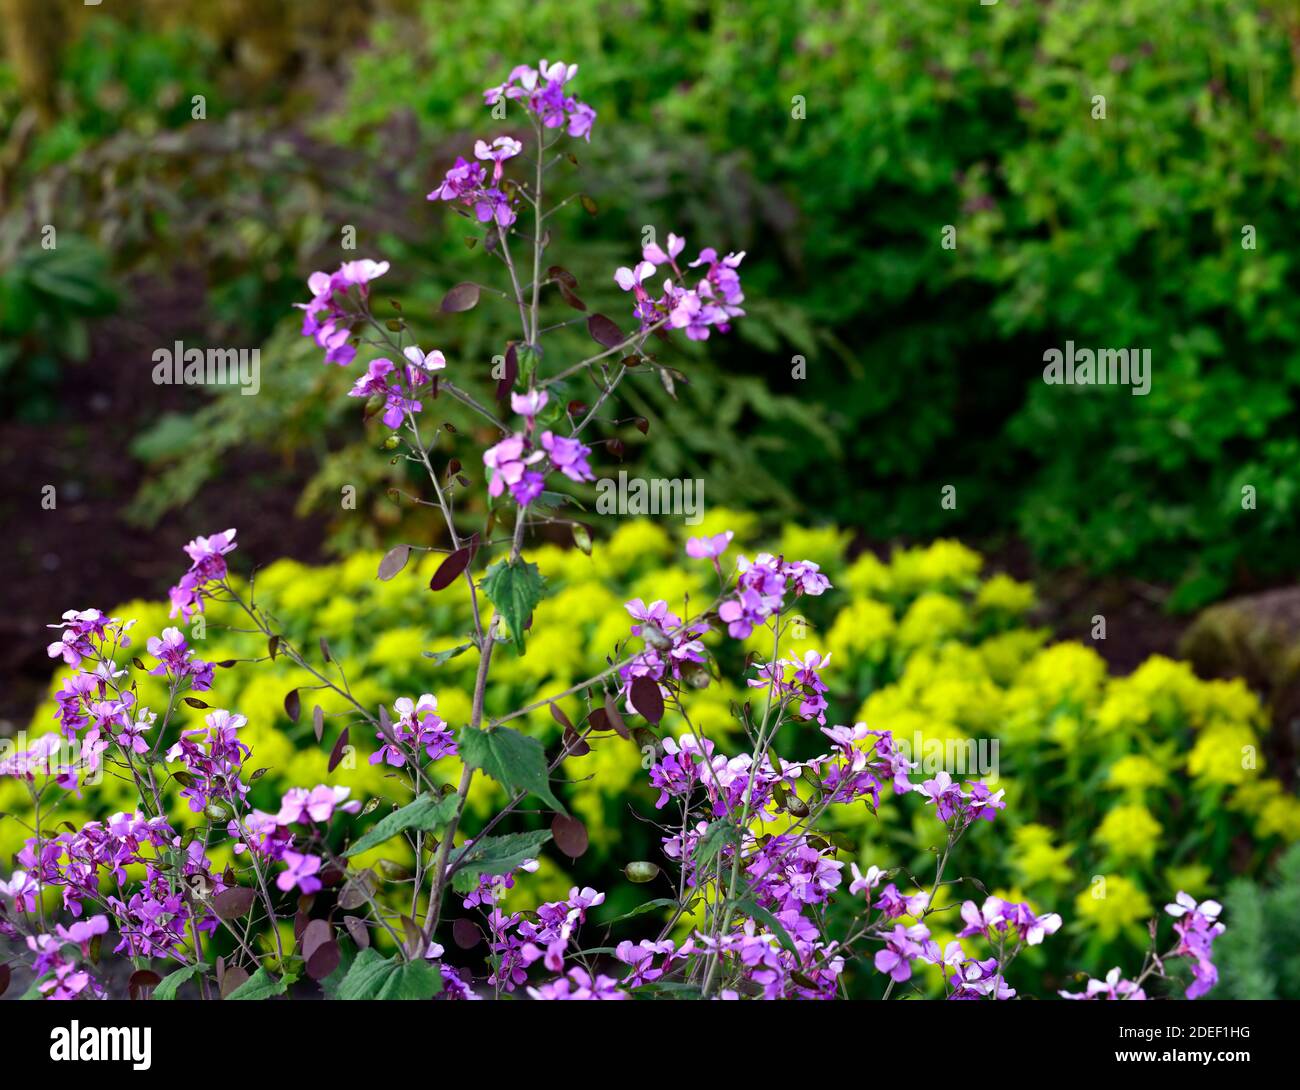 Lunaria annua Chedglow,annual honesty,purple honesty,,mix,mixed,combination,bed,border,gardens,mixed planting scheme,spring,euphorbia polychroma,Cushi Stock Photo